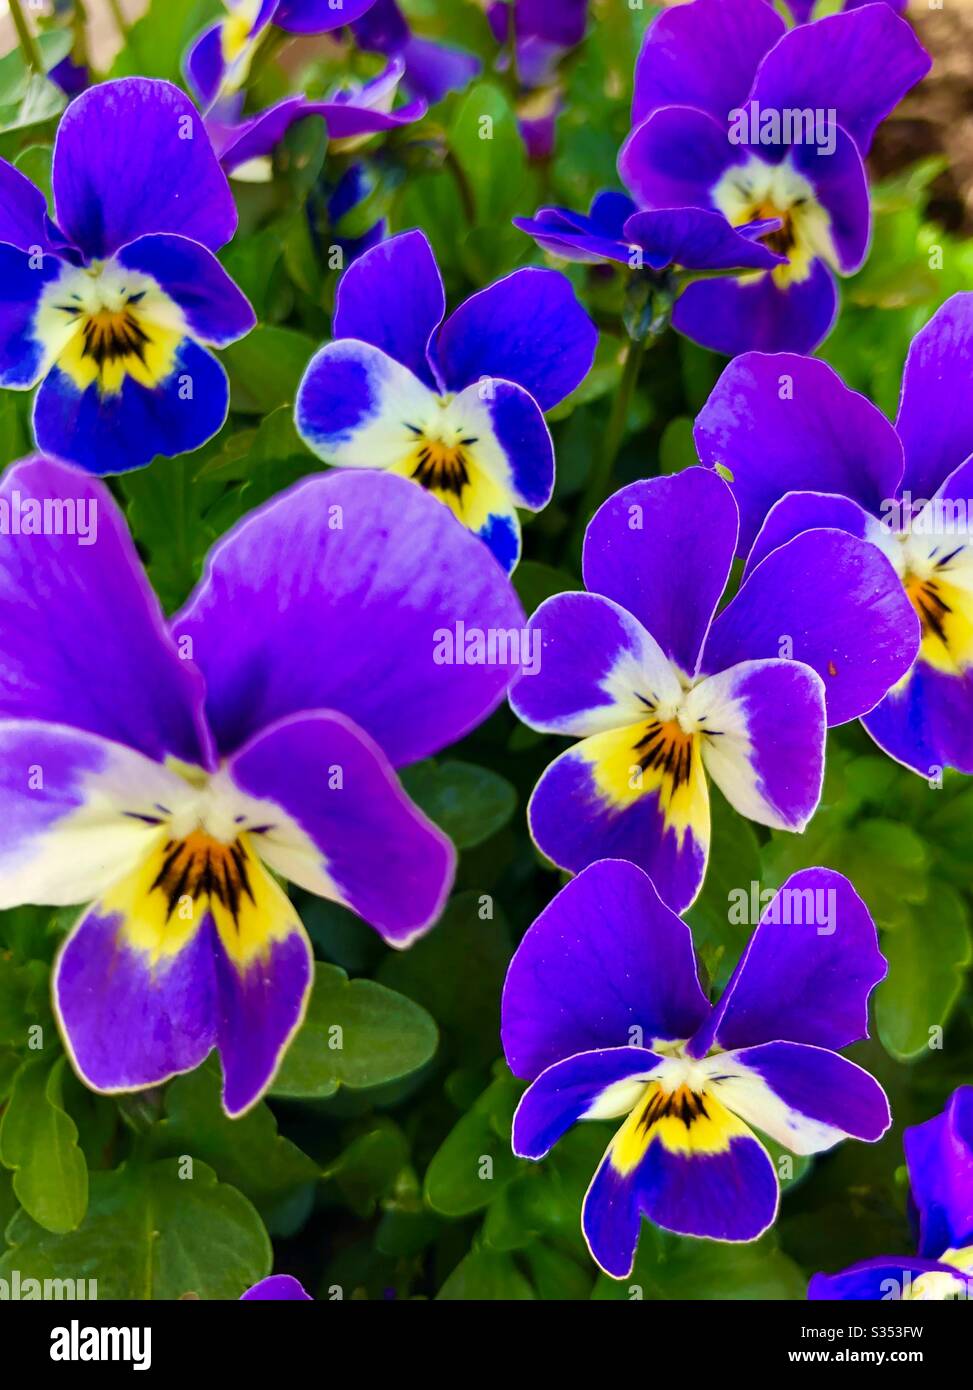 Purple pansies close up Stock Photo